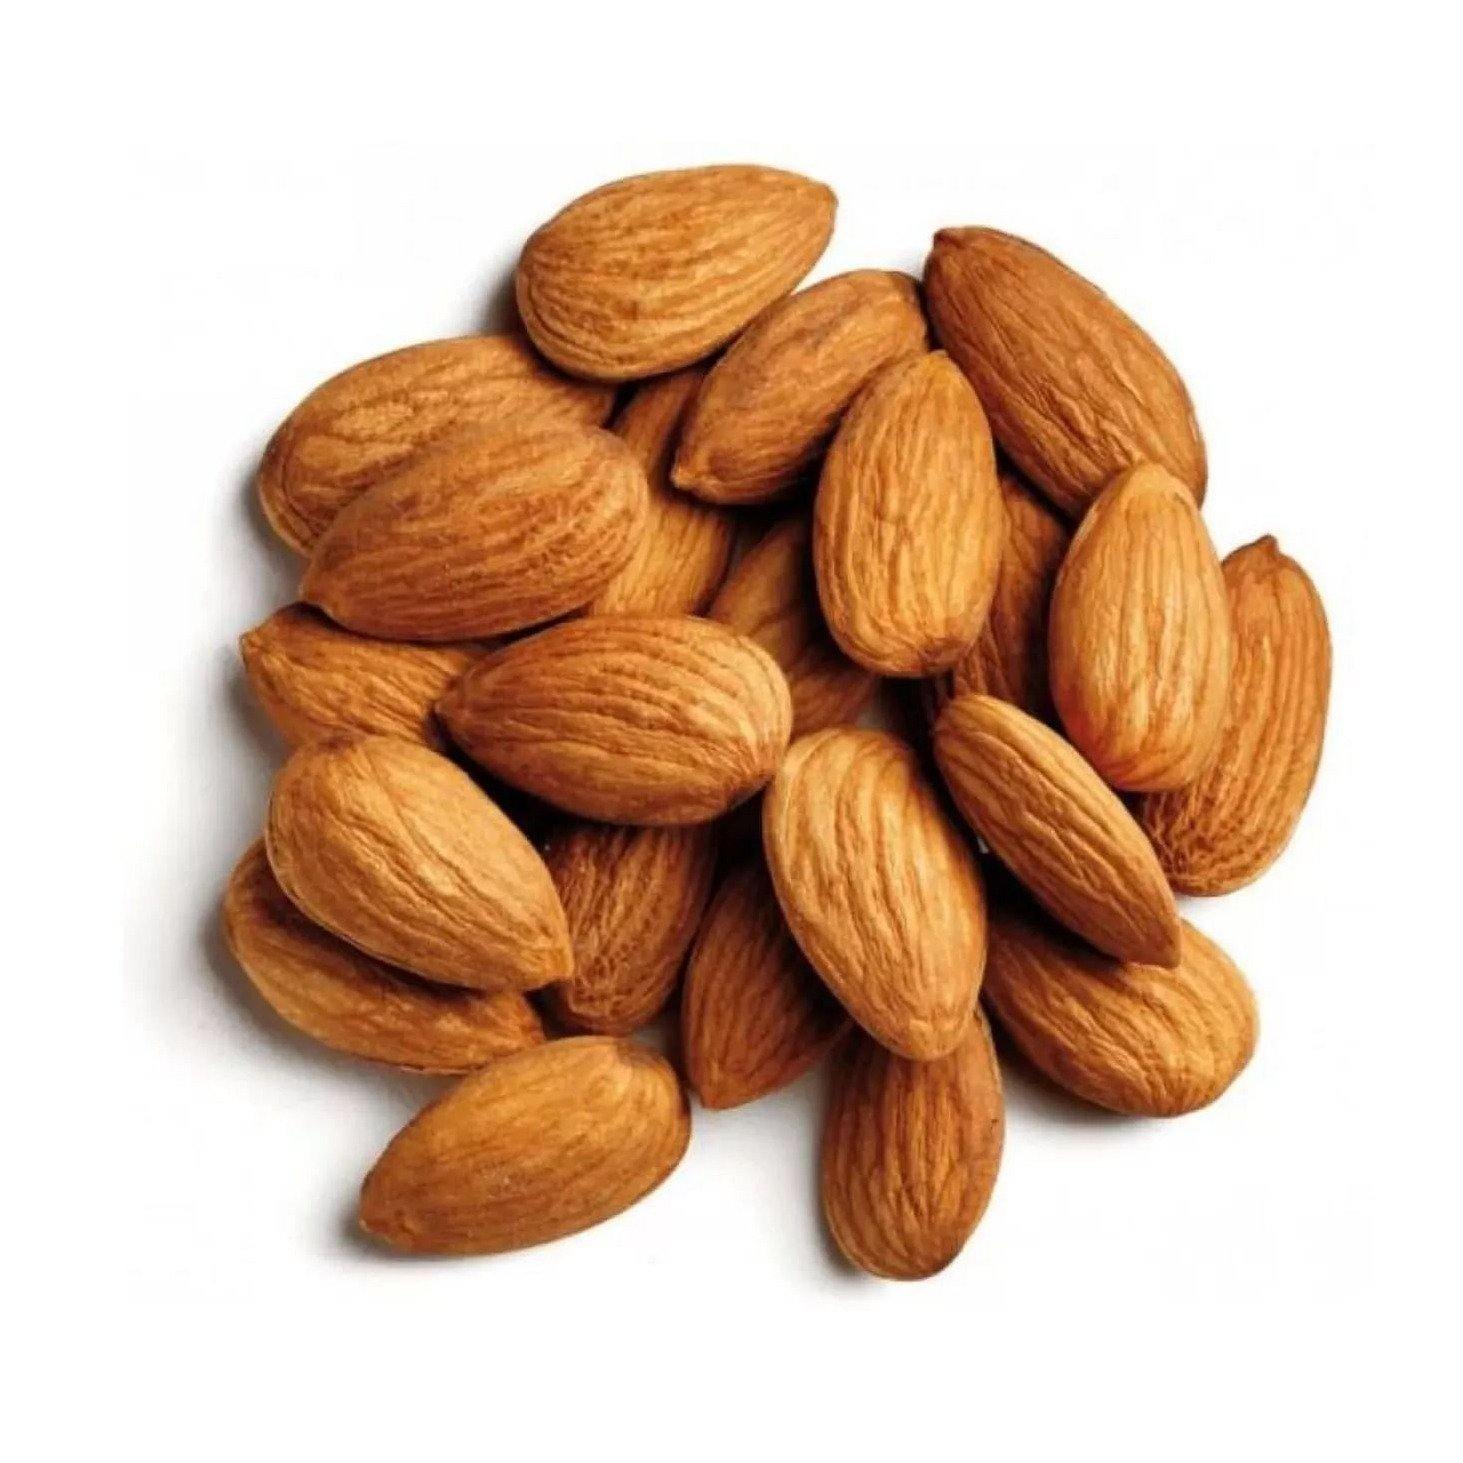 California Almonds - Bhavnagari Dry Fruit Co